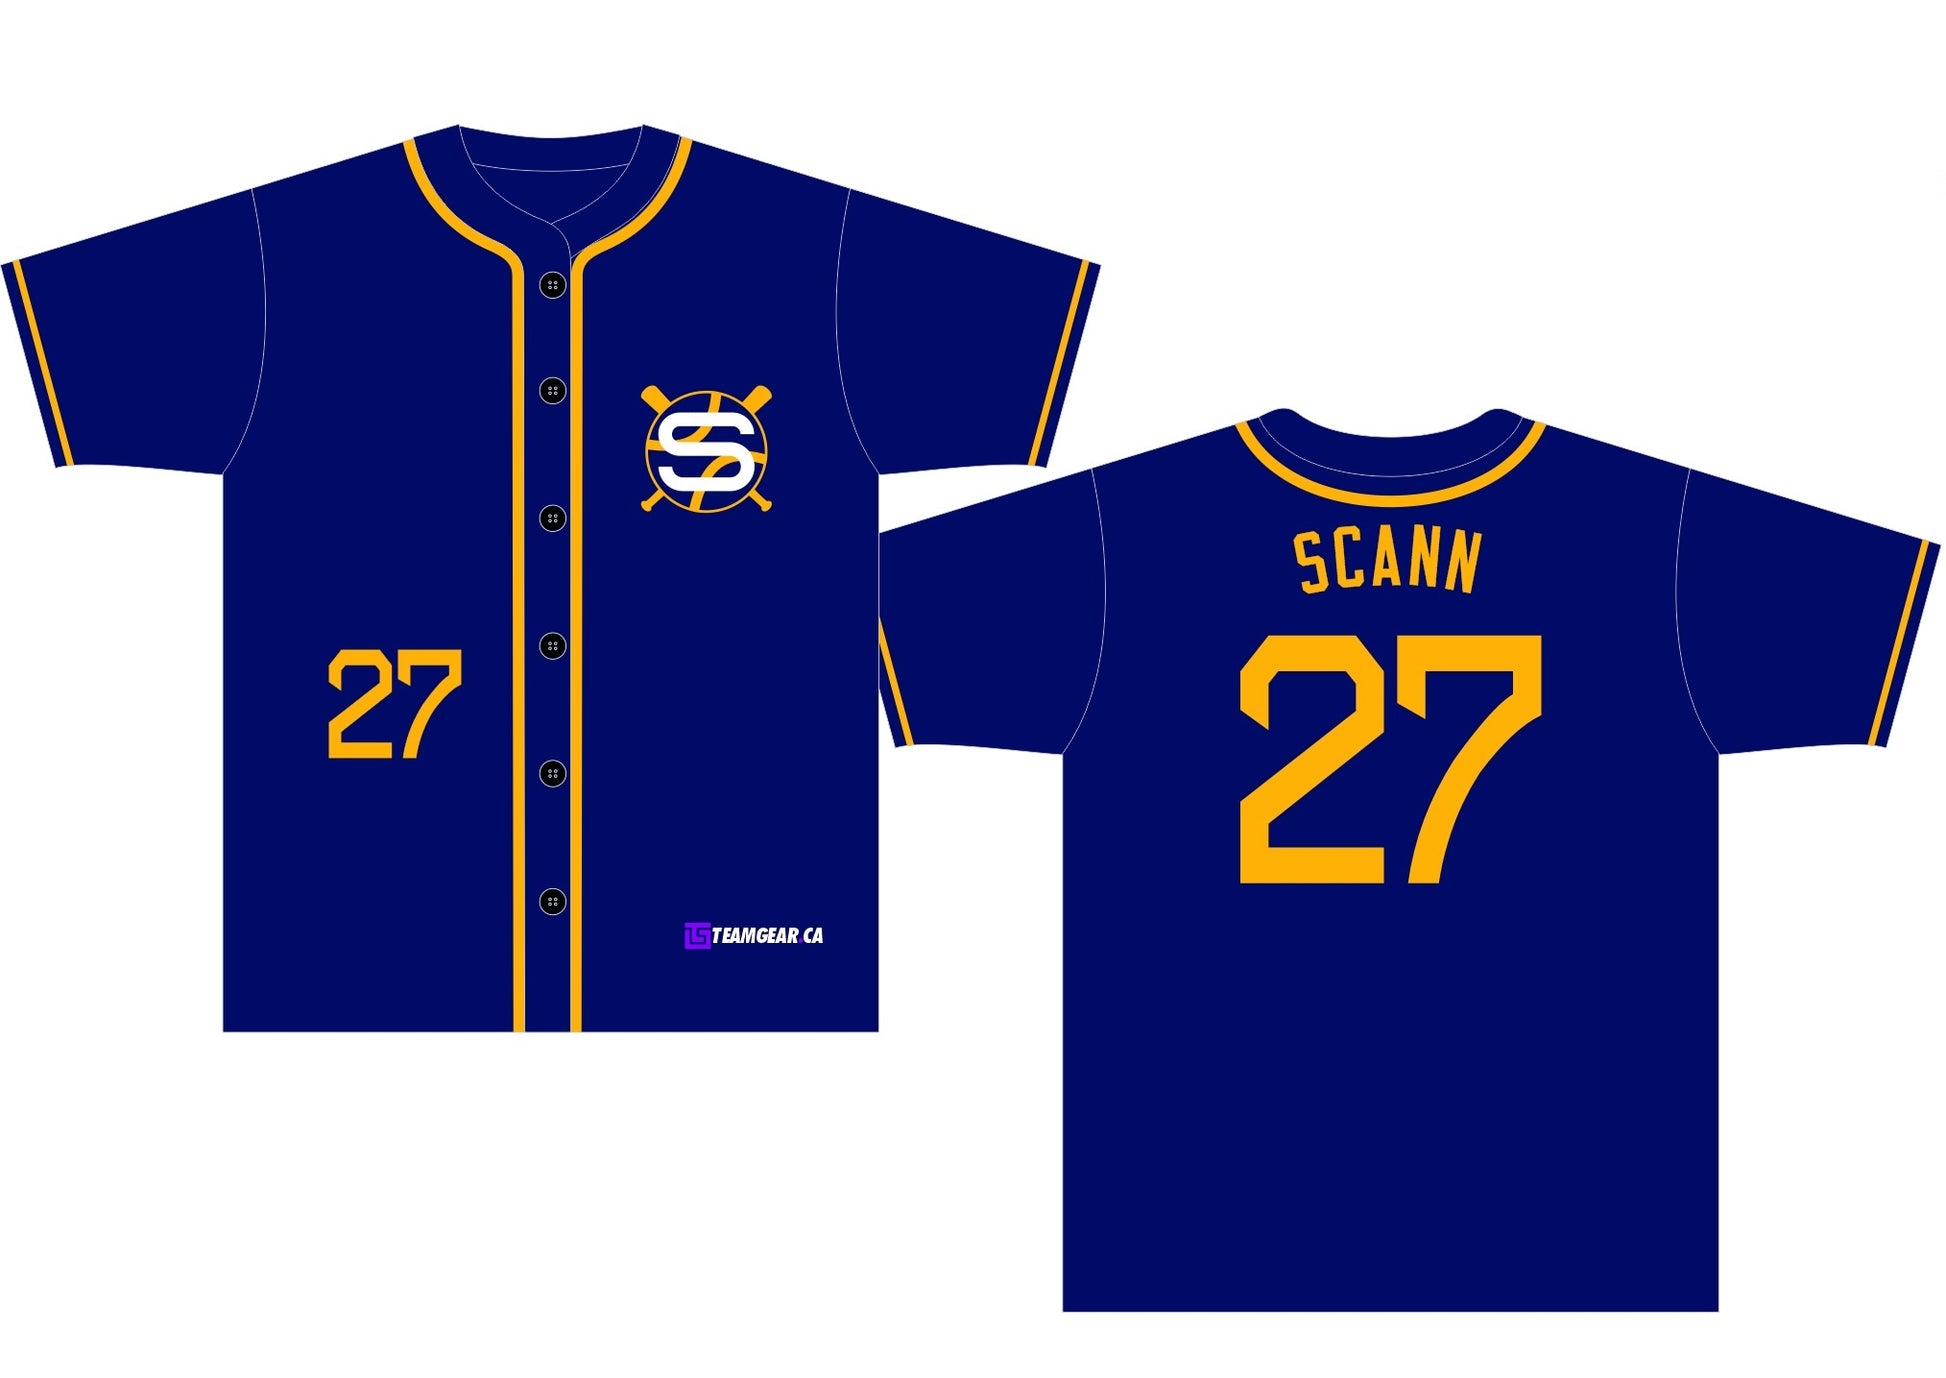 ShowZone creator custom jersey for Scann made by TeamGear Canada